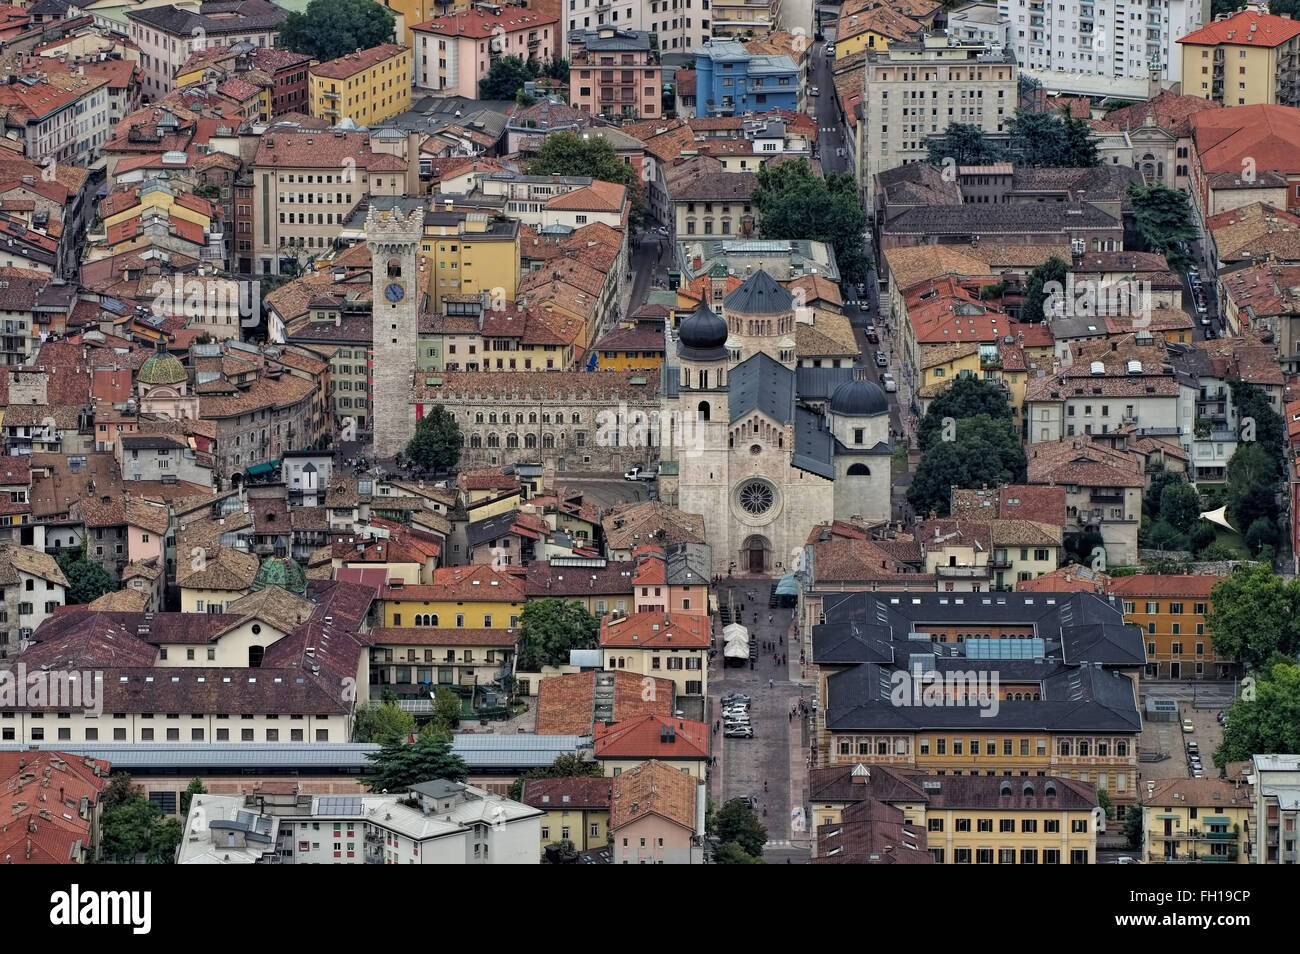 Die Italienische Stadt Trento - la città italiana Trento Foto Stock